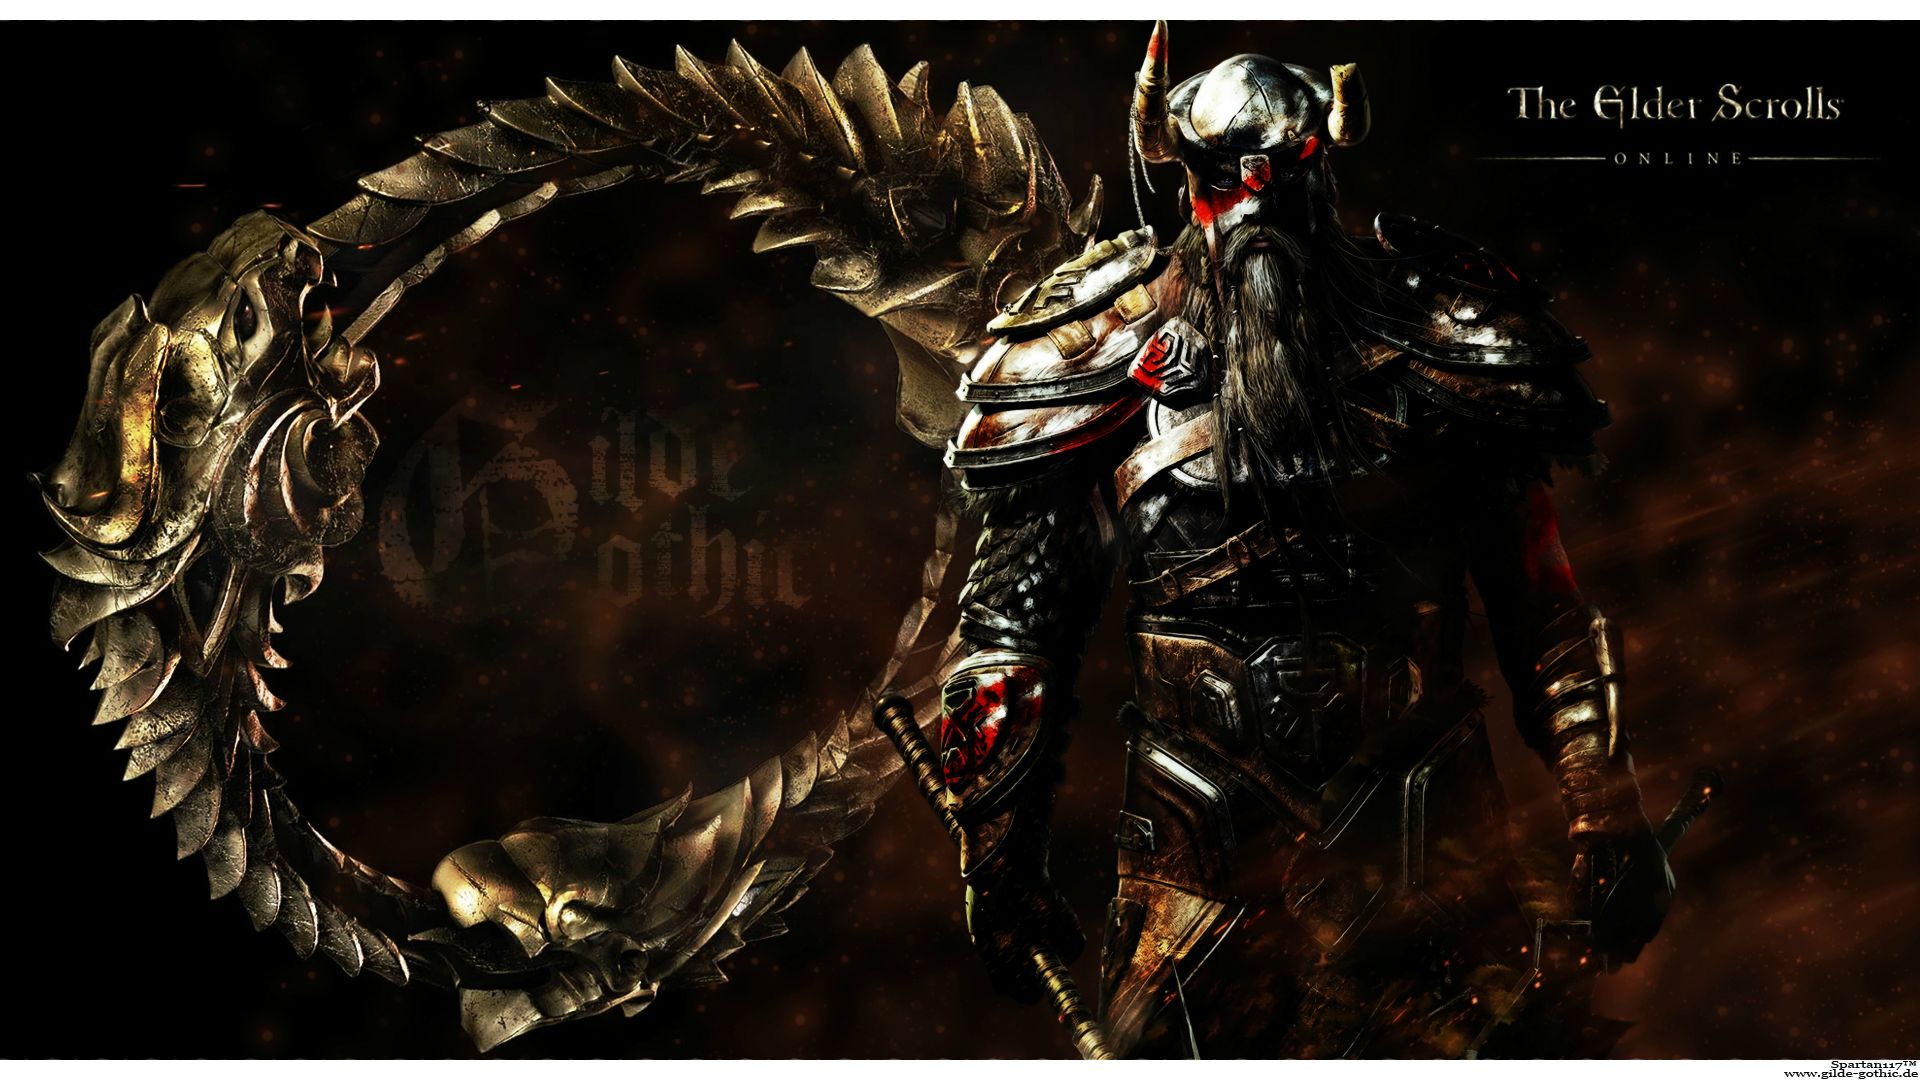 The Elder Scrolls Online Full HD Wallpaper and Background Image